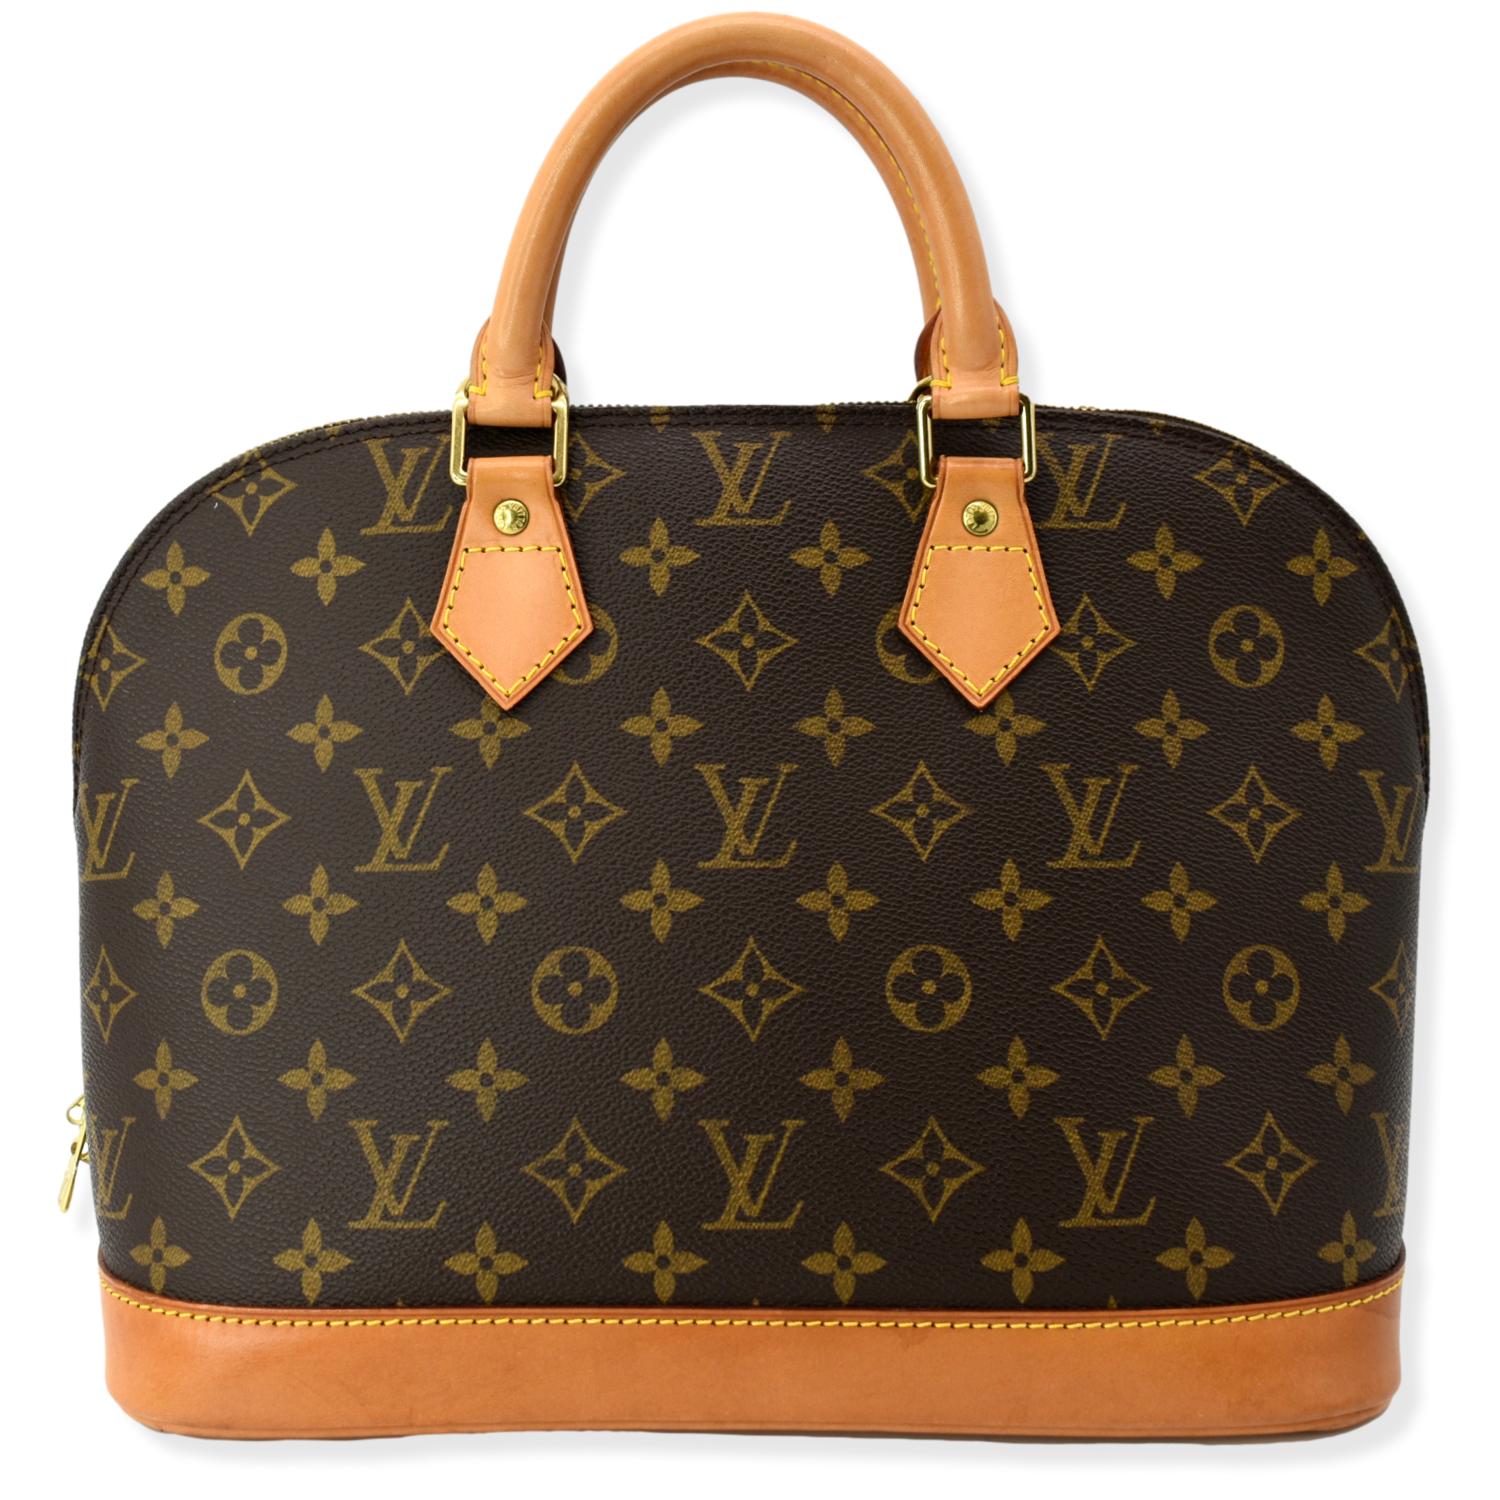 Louis Vuitton Satchel Handbags for Women